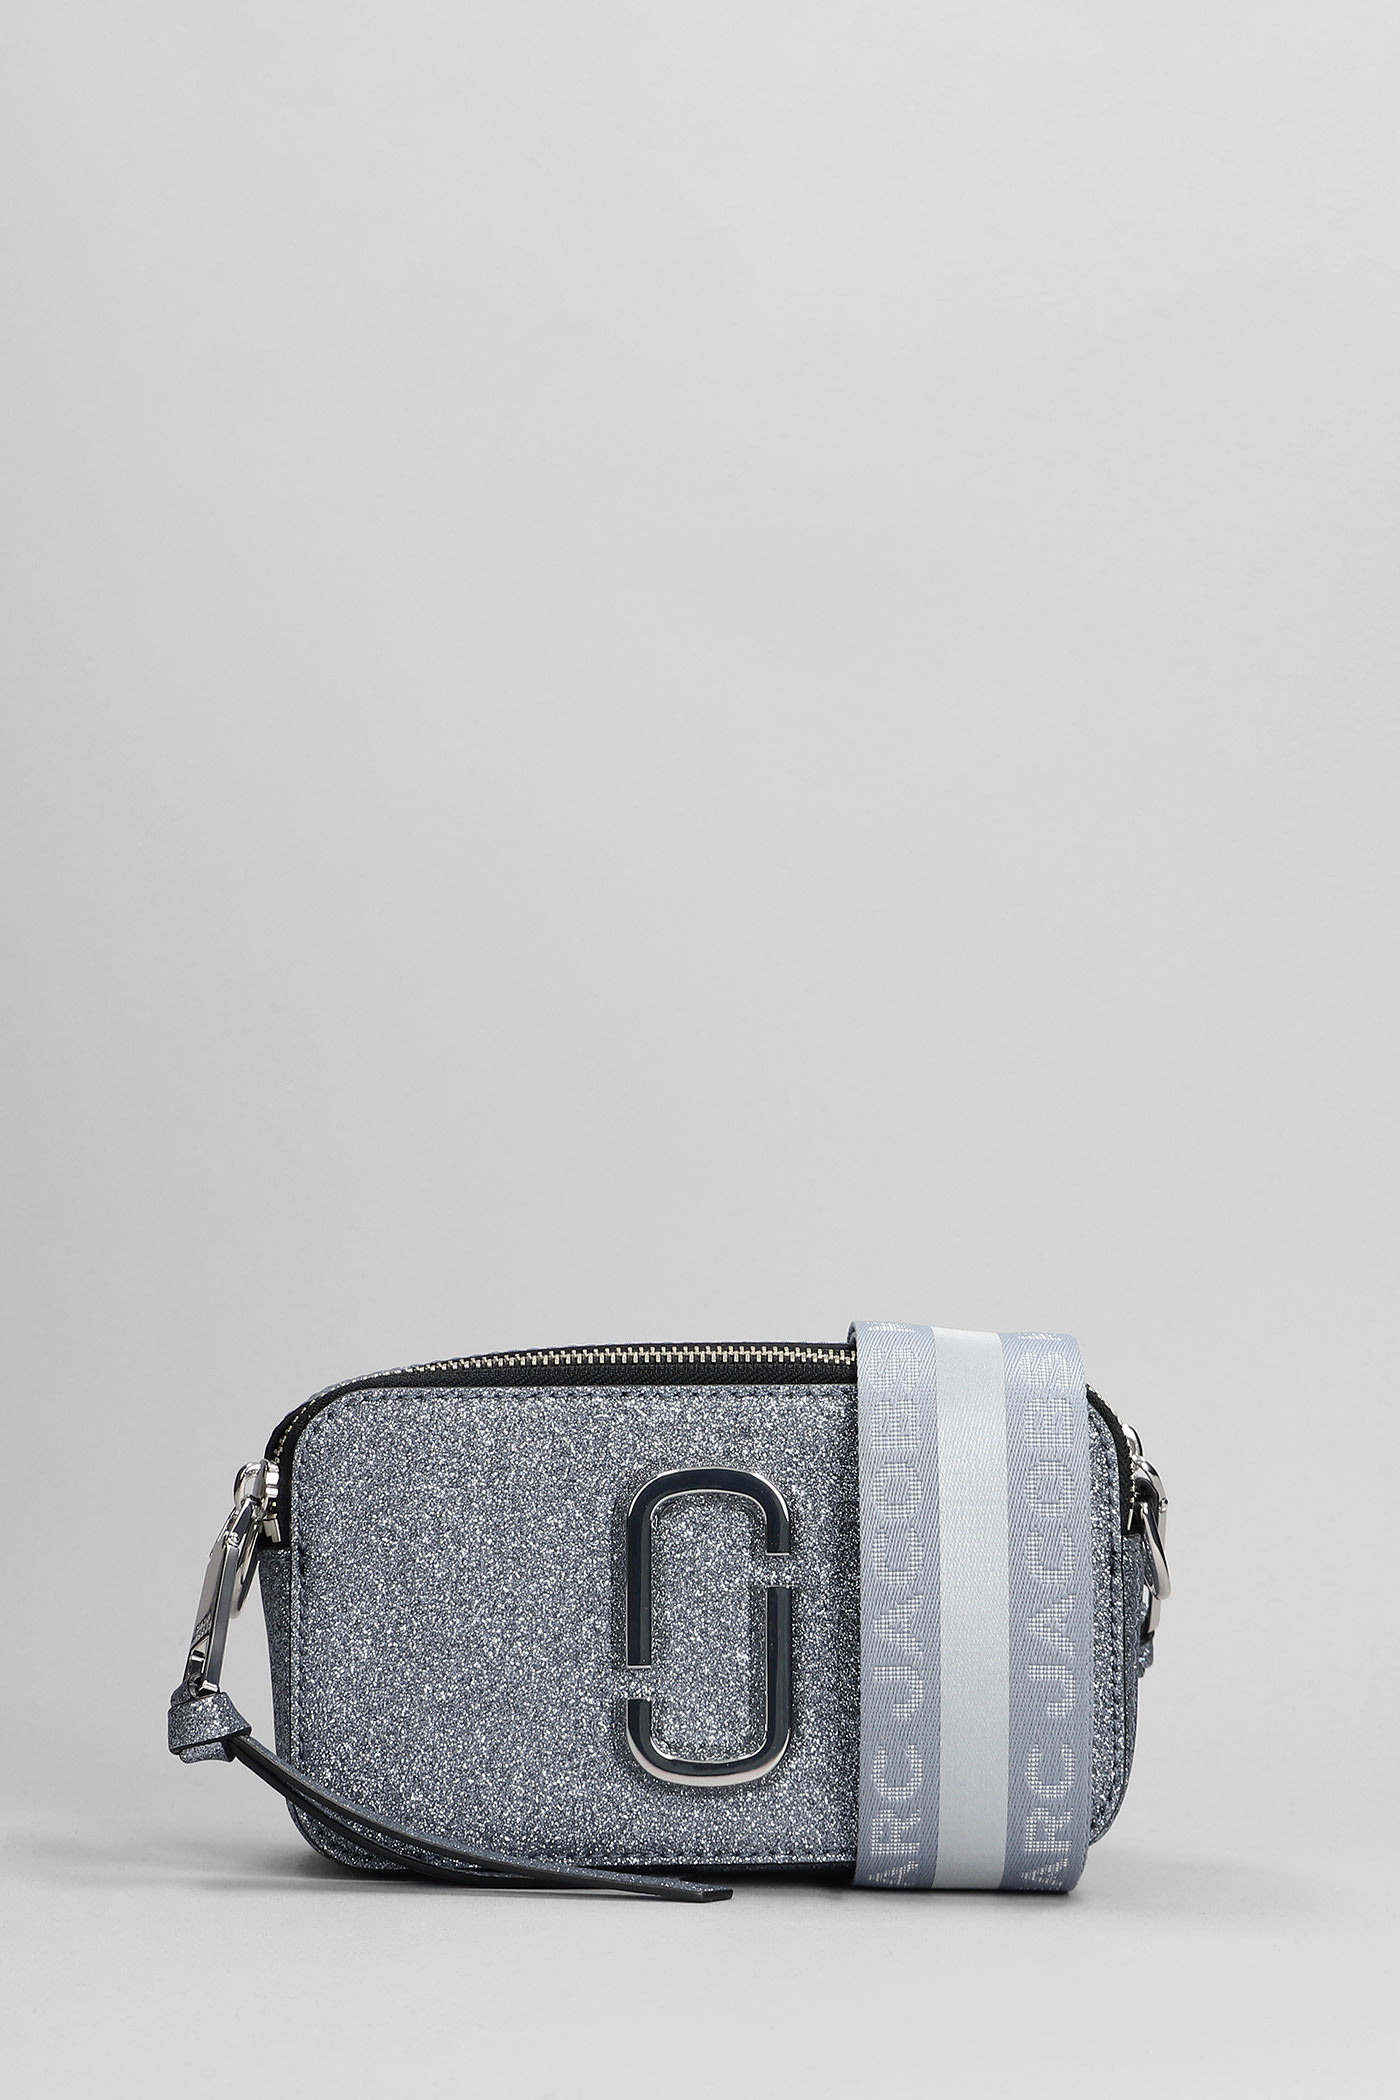 Marc Jacobs Snapshot Shoulder Bag In Silver Leather